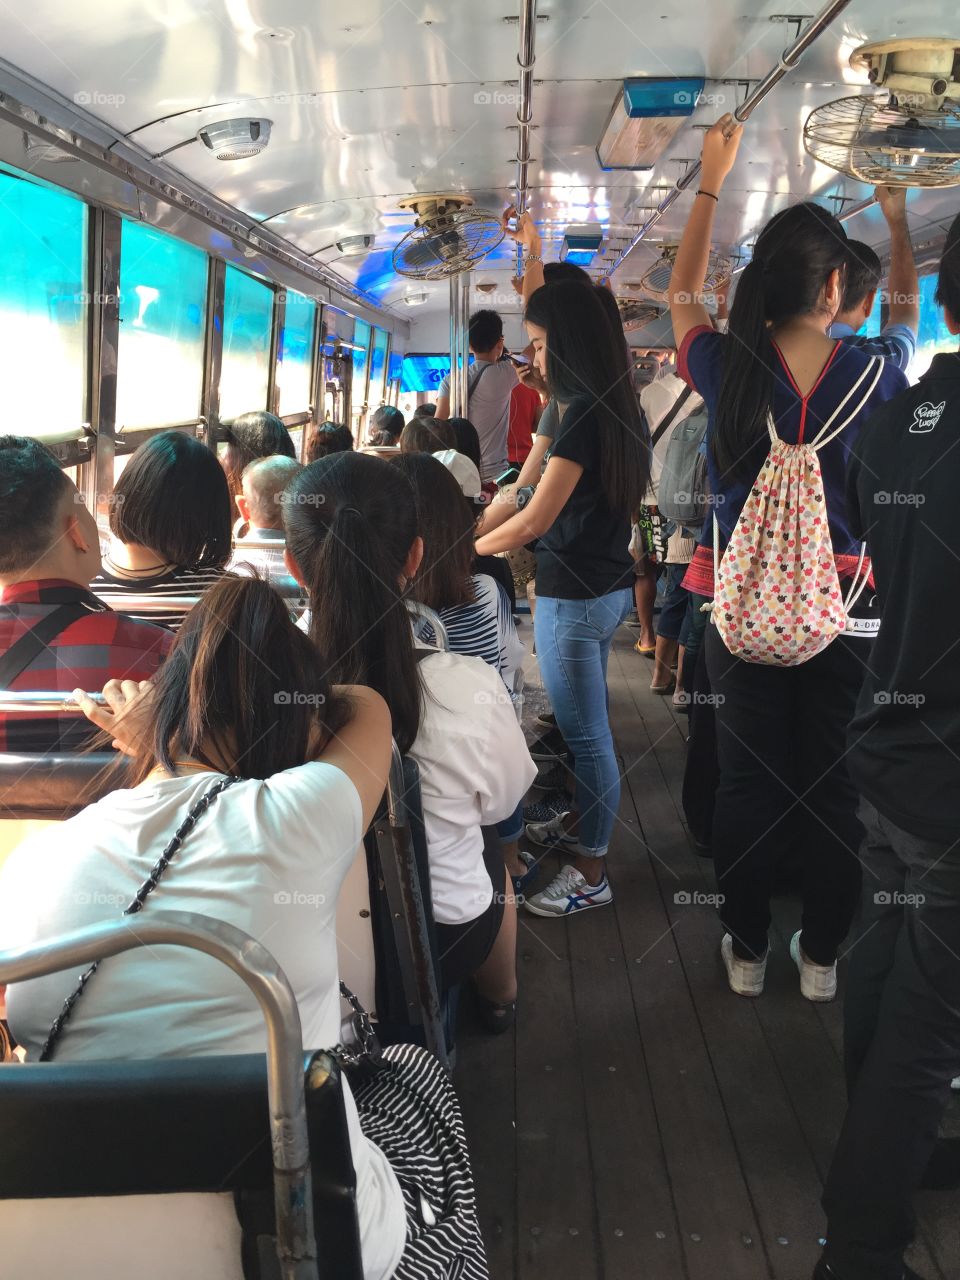 An incredibly hot bus journey in Bangkok